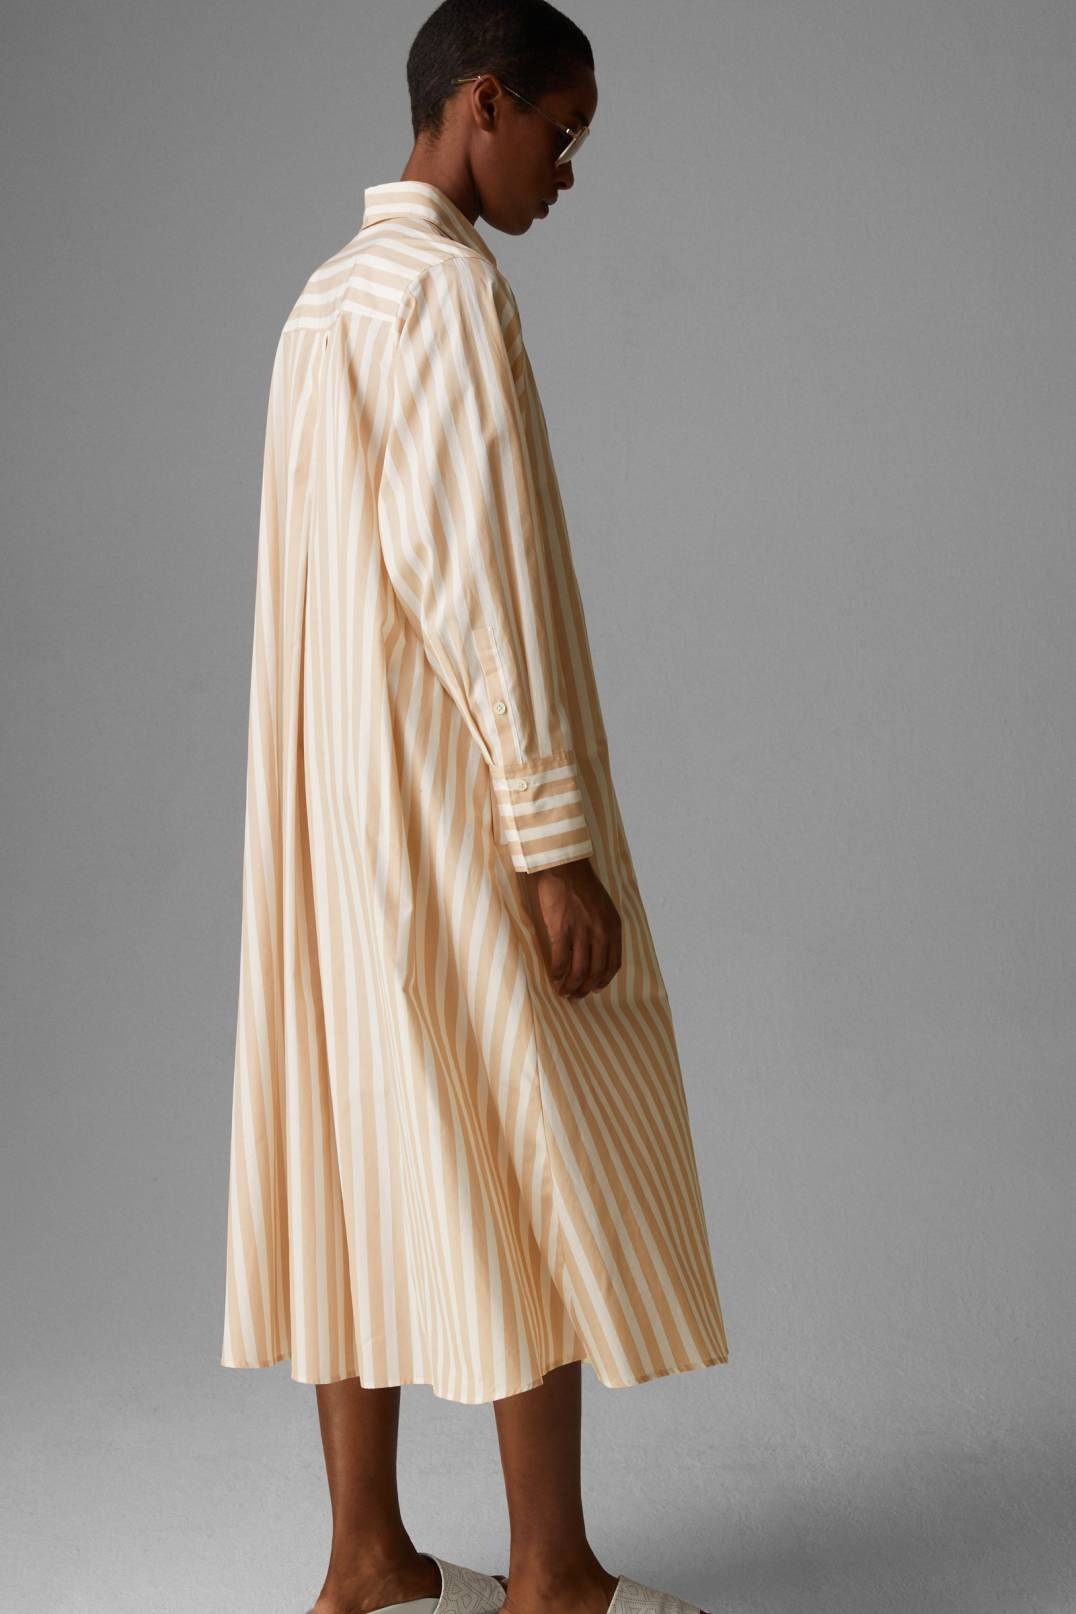 LIA SHIRT DRESS IN BEIGE/OFF-WHITE - 3